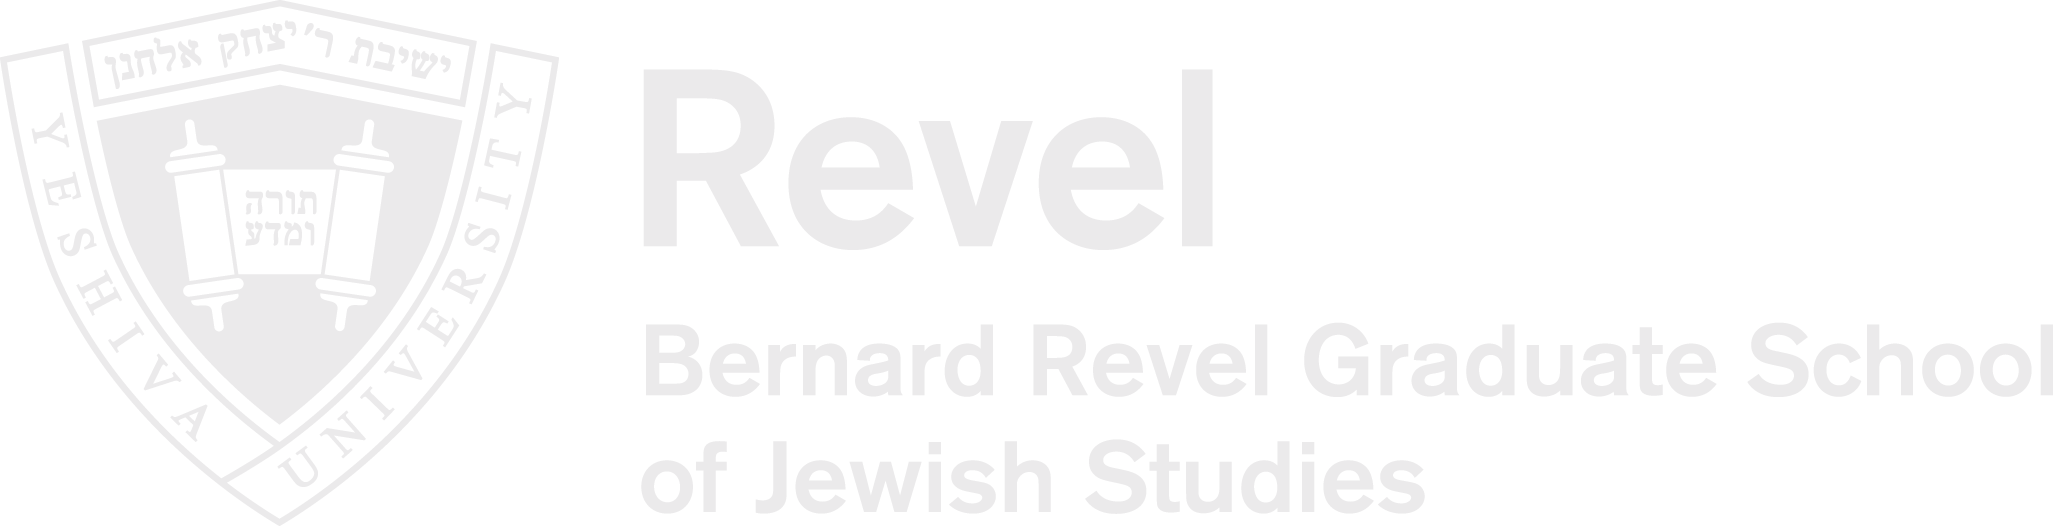 Bernard Revel School of Jewish Studies